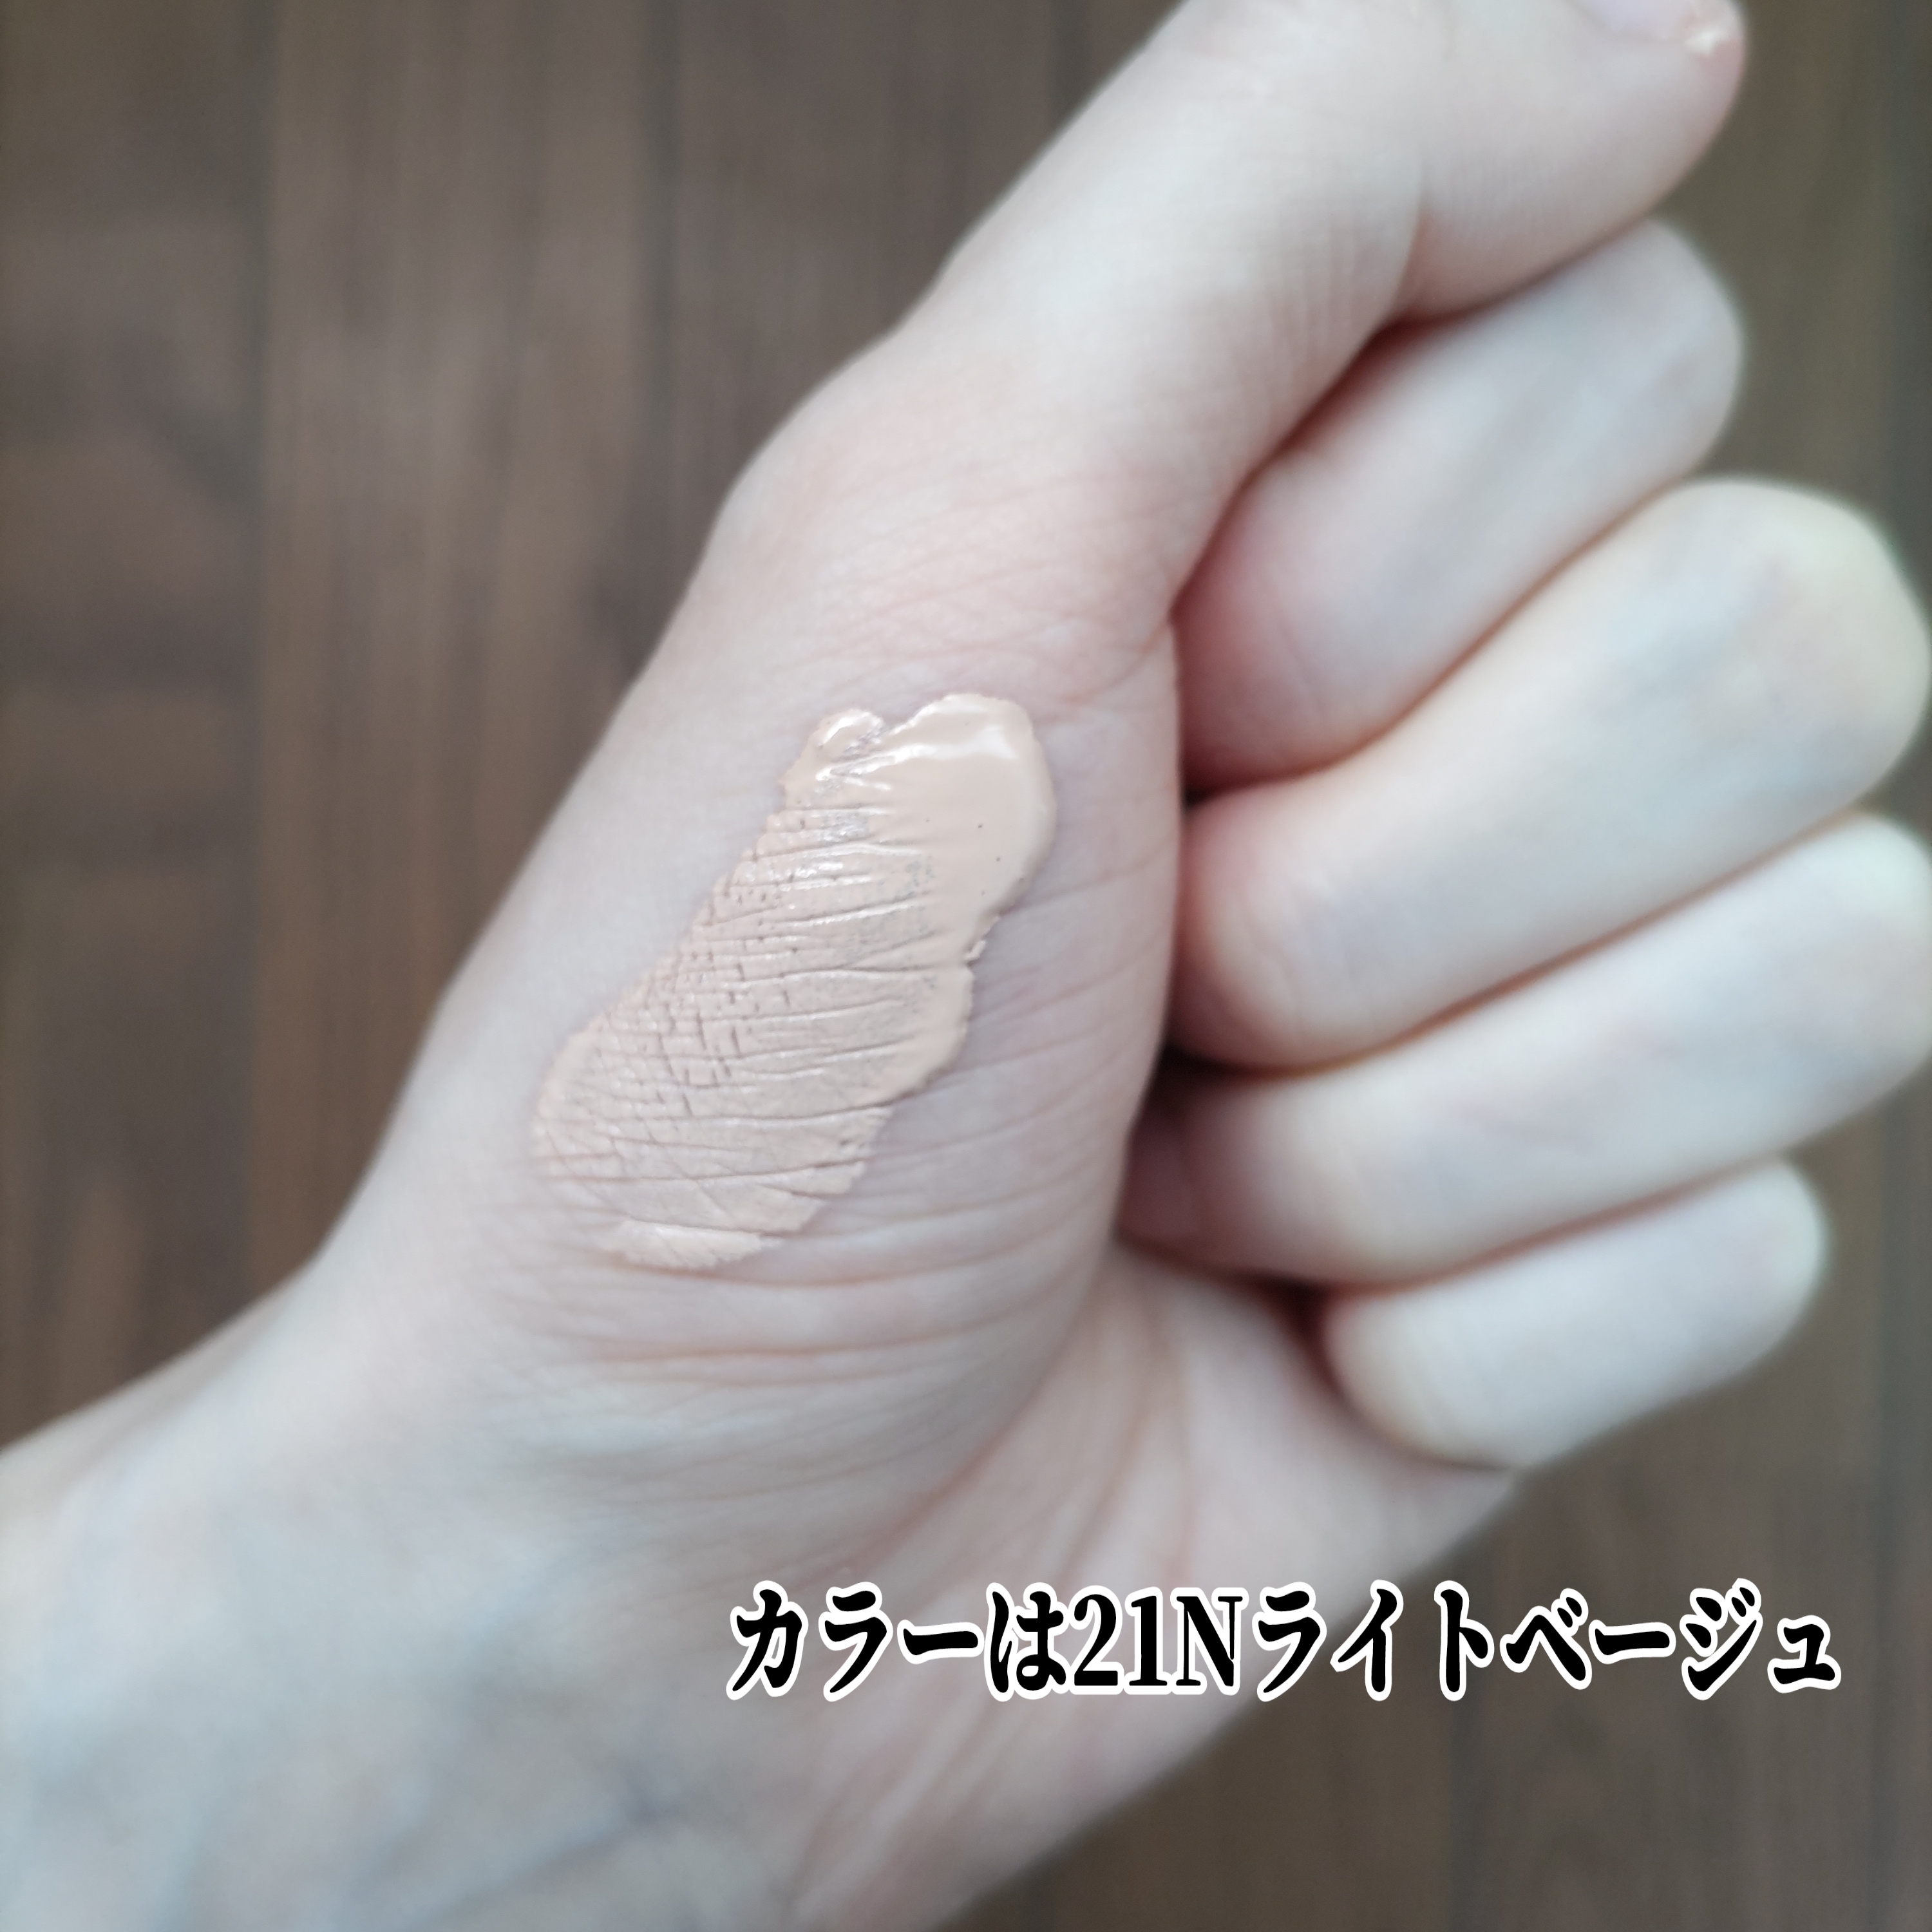 INGA タトゥークッションファンデーションを使ったYuKaRi♡さんのクチコミ画像5